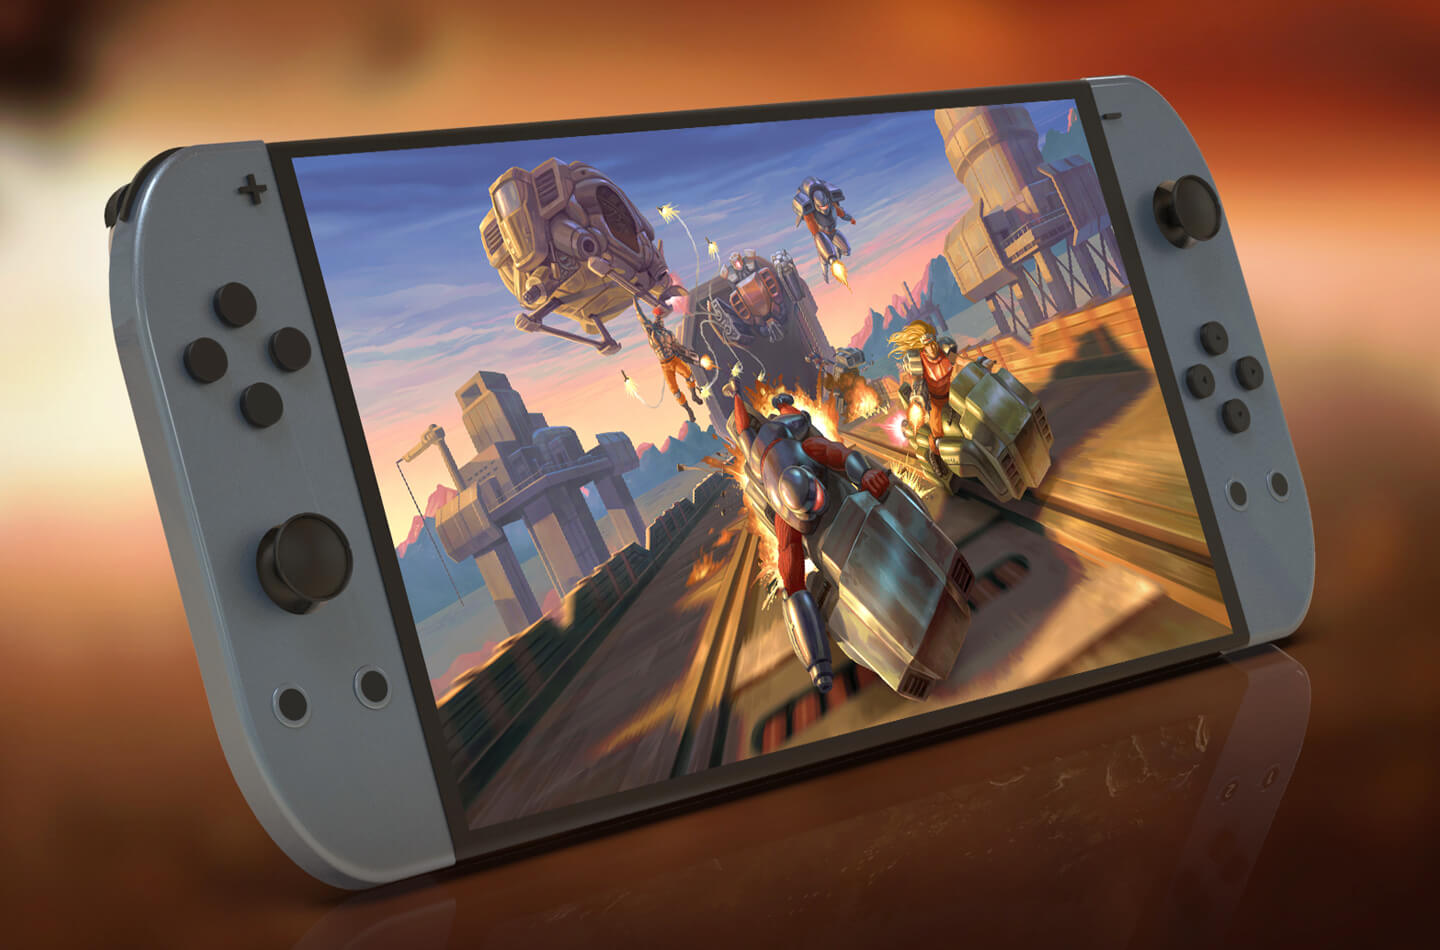 Egyptische Lach Hilarisch Nintendo Switch 2: twee nieuwe game consoles op komst | LetsGoDigital